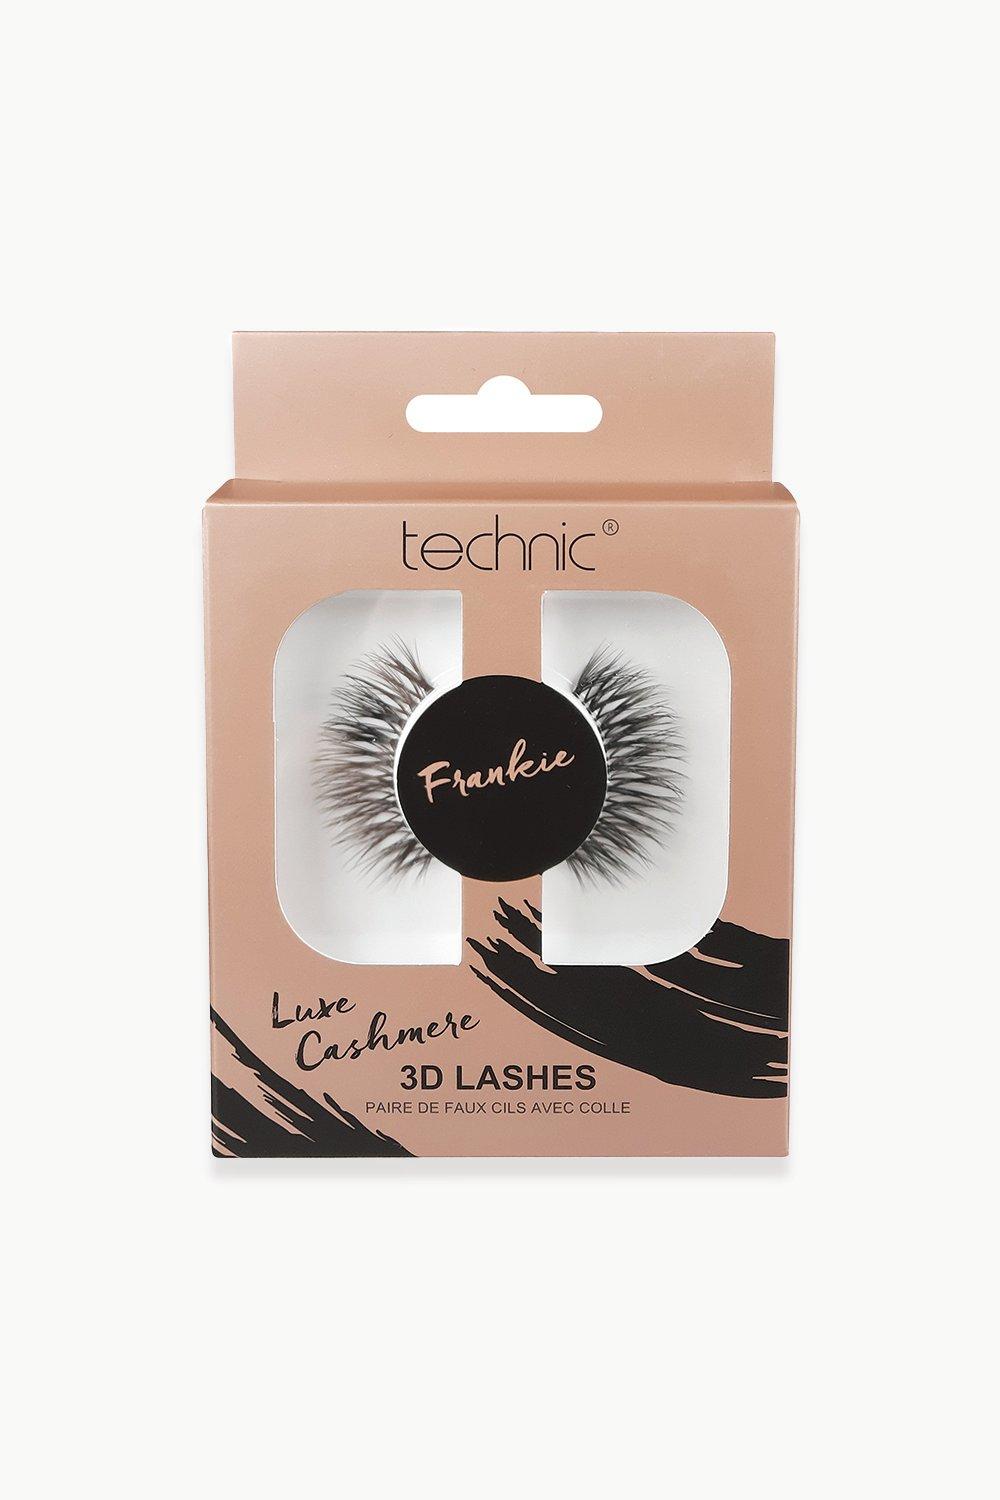 Technic Luxe Cashmere Lashes - Frankie, Black